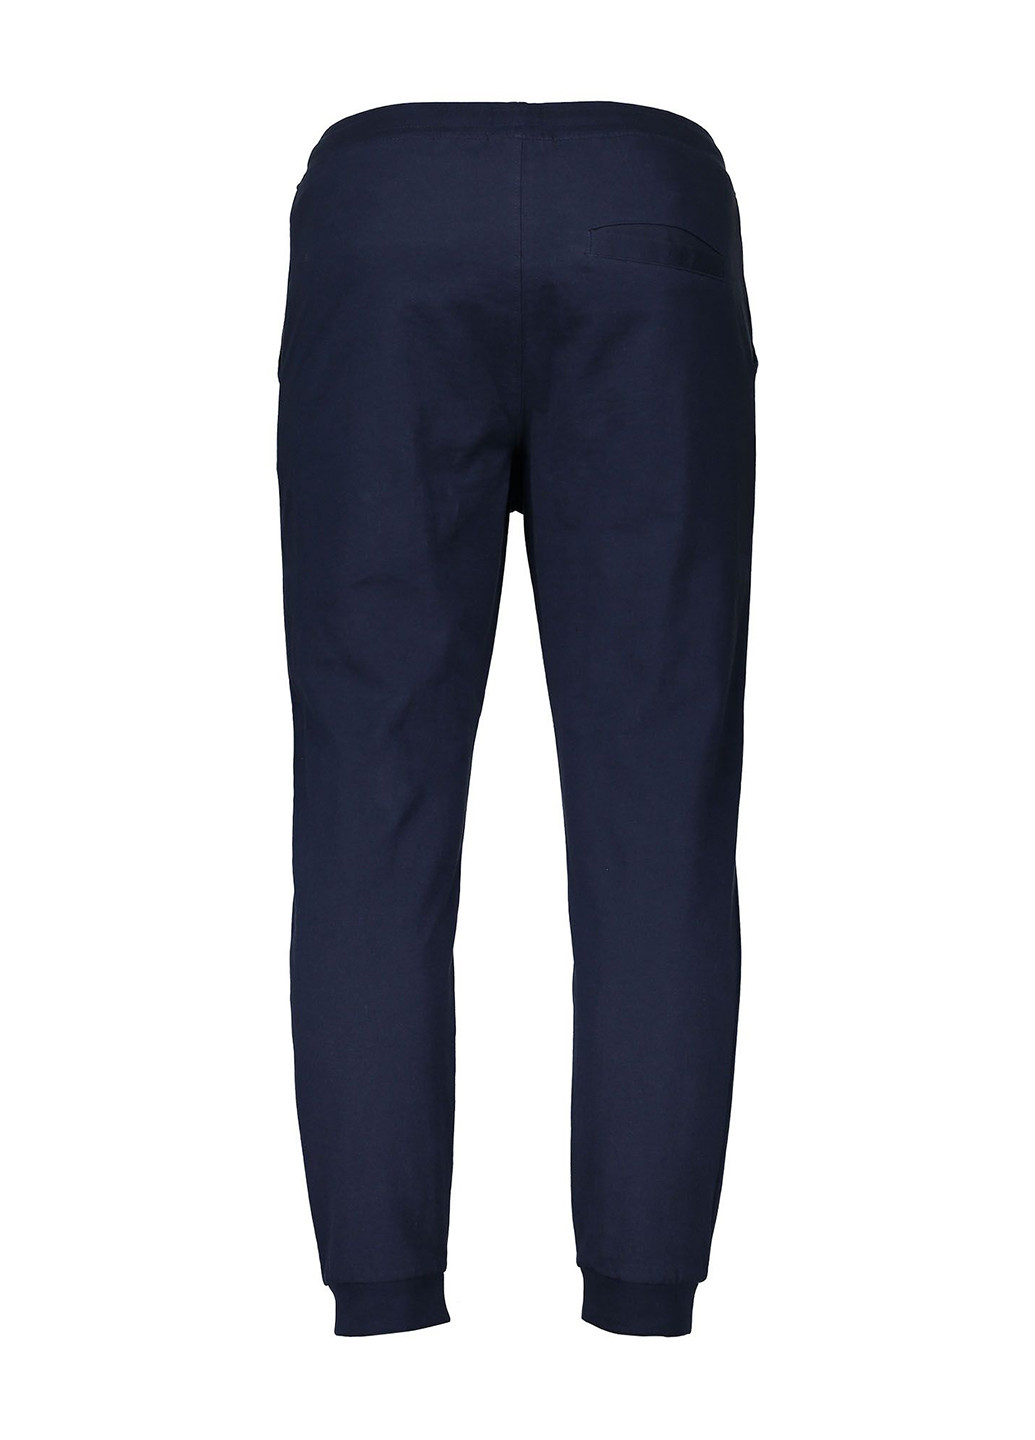 Темно-синие кэжуал демисезонные со средней талией брюки Piazza Italia